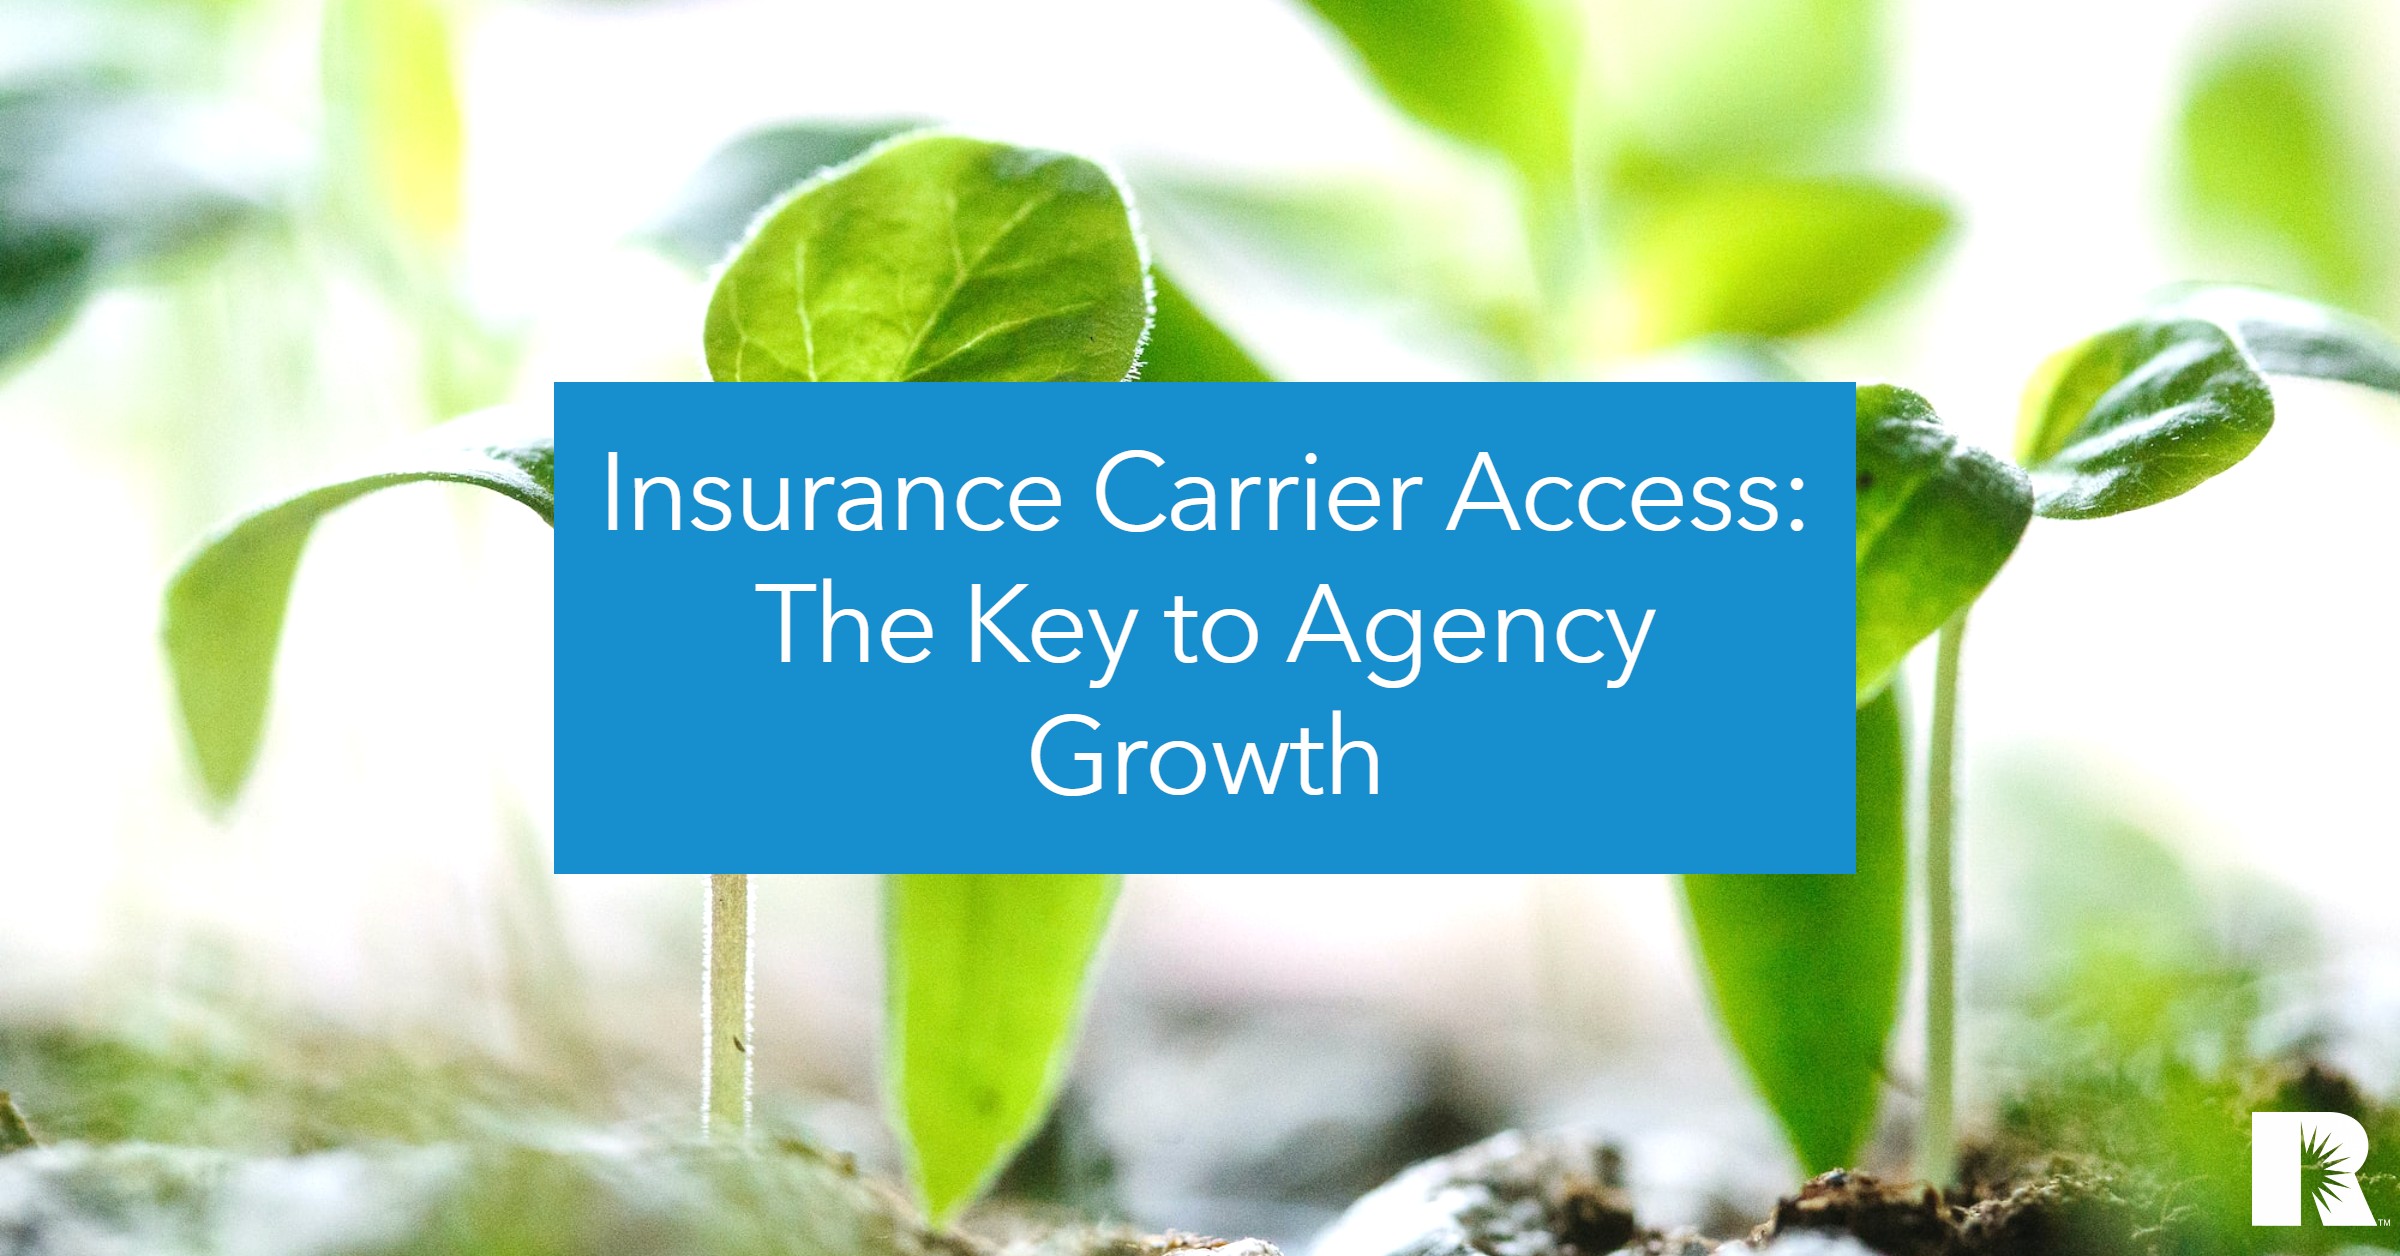 Insurance Carrier Access